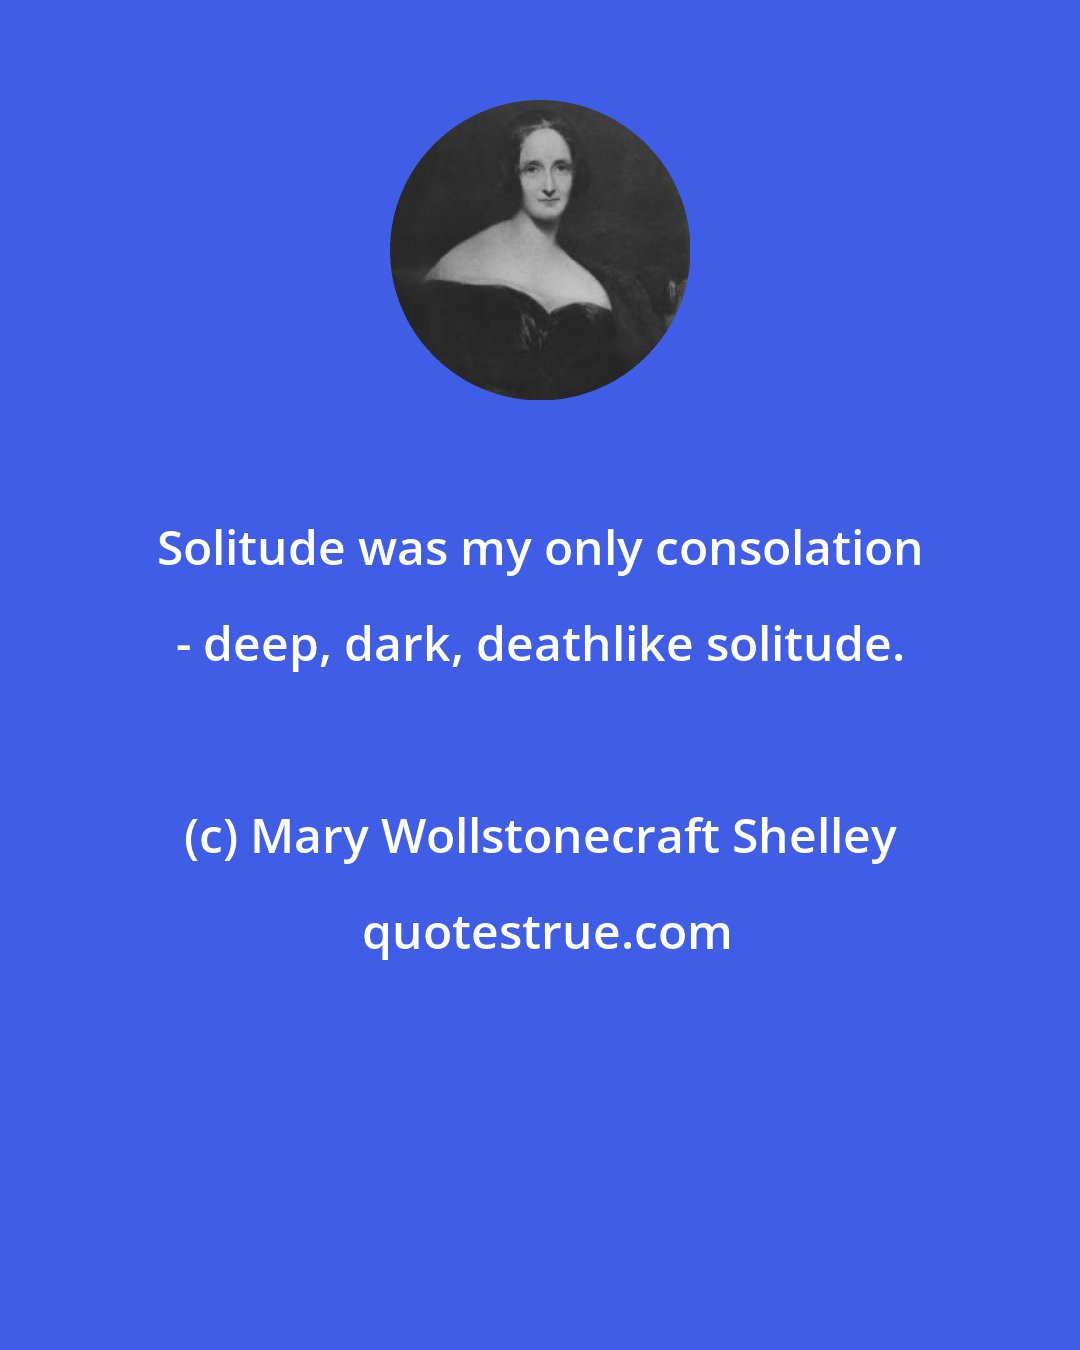 Mary Wollstonecraft Shelley: Solitude was my only consolation - deep, dark, deathlike solitude.